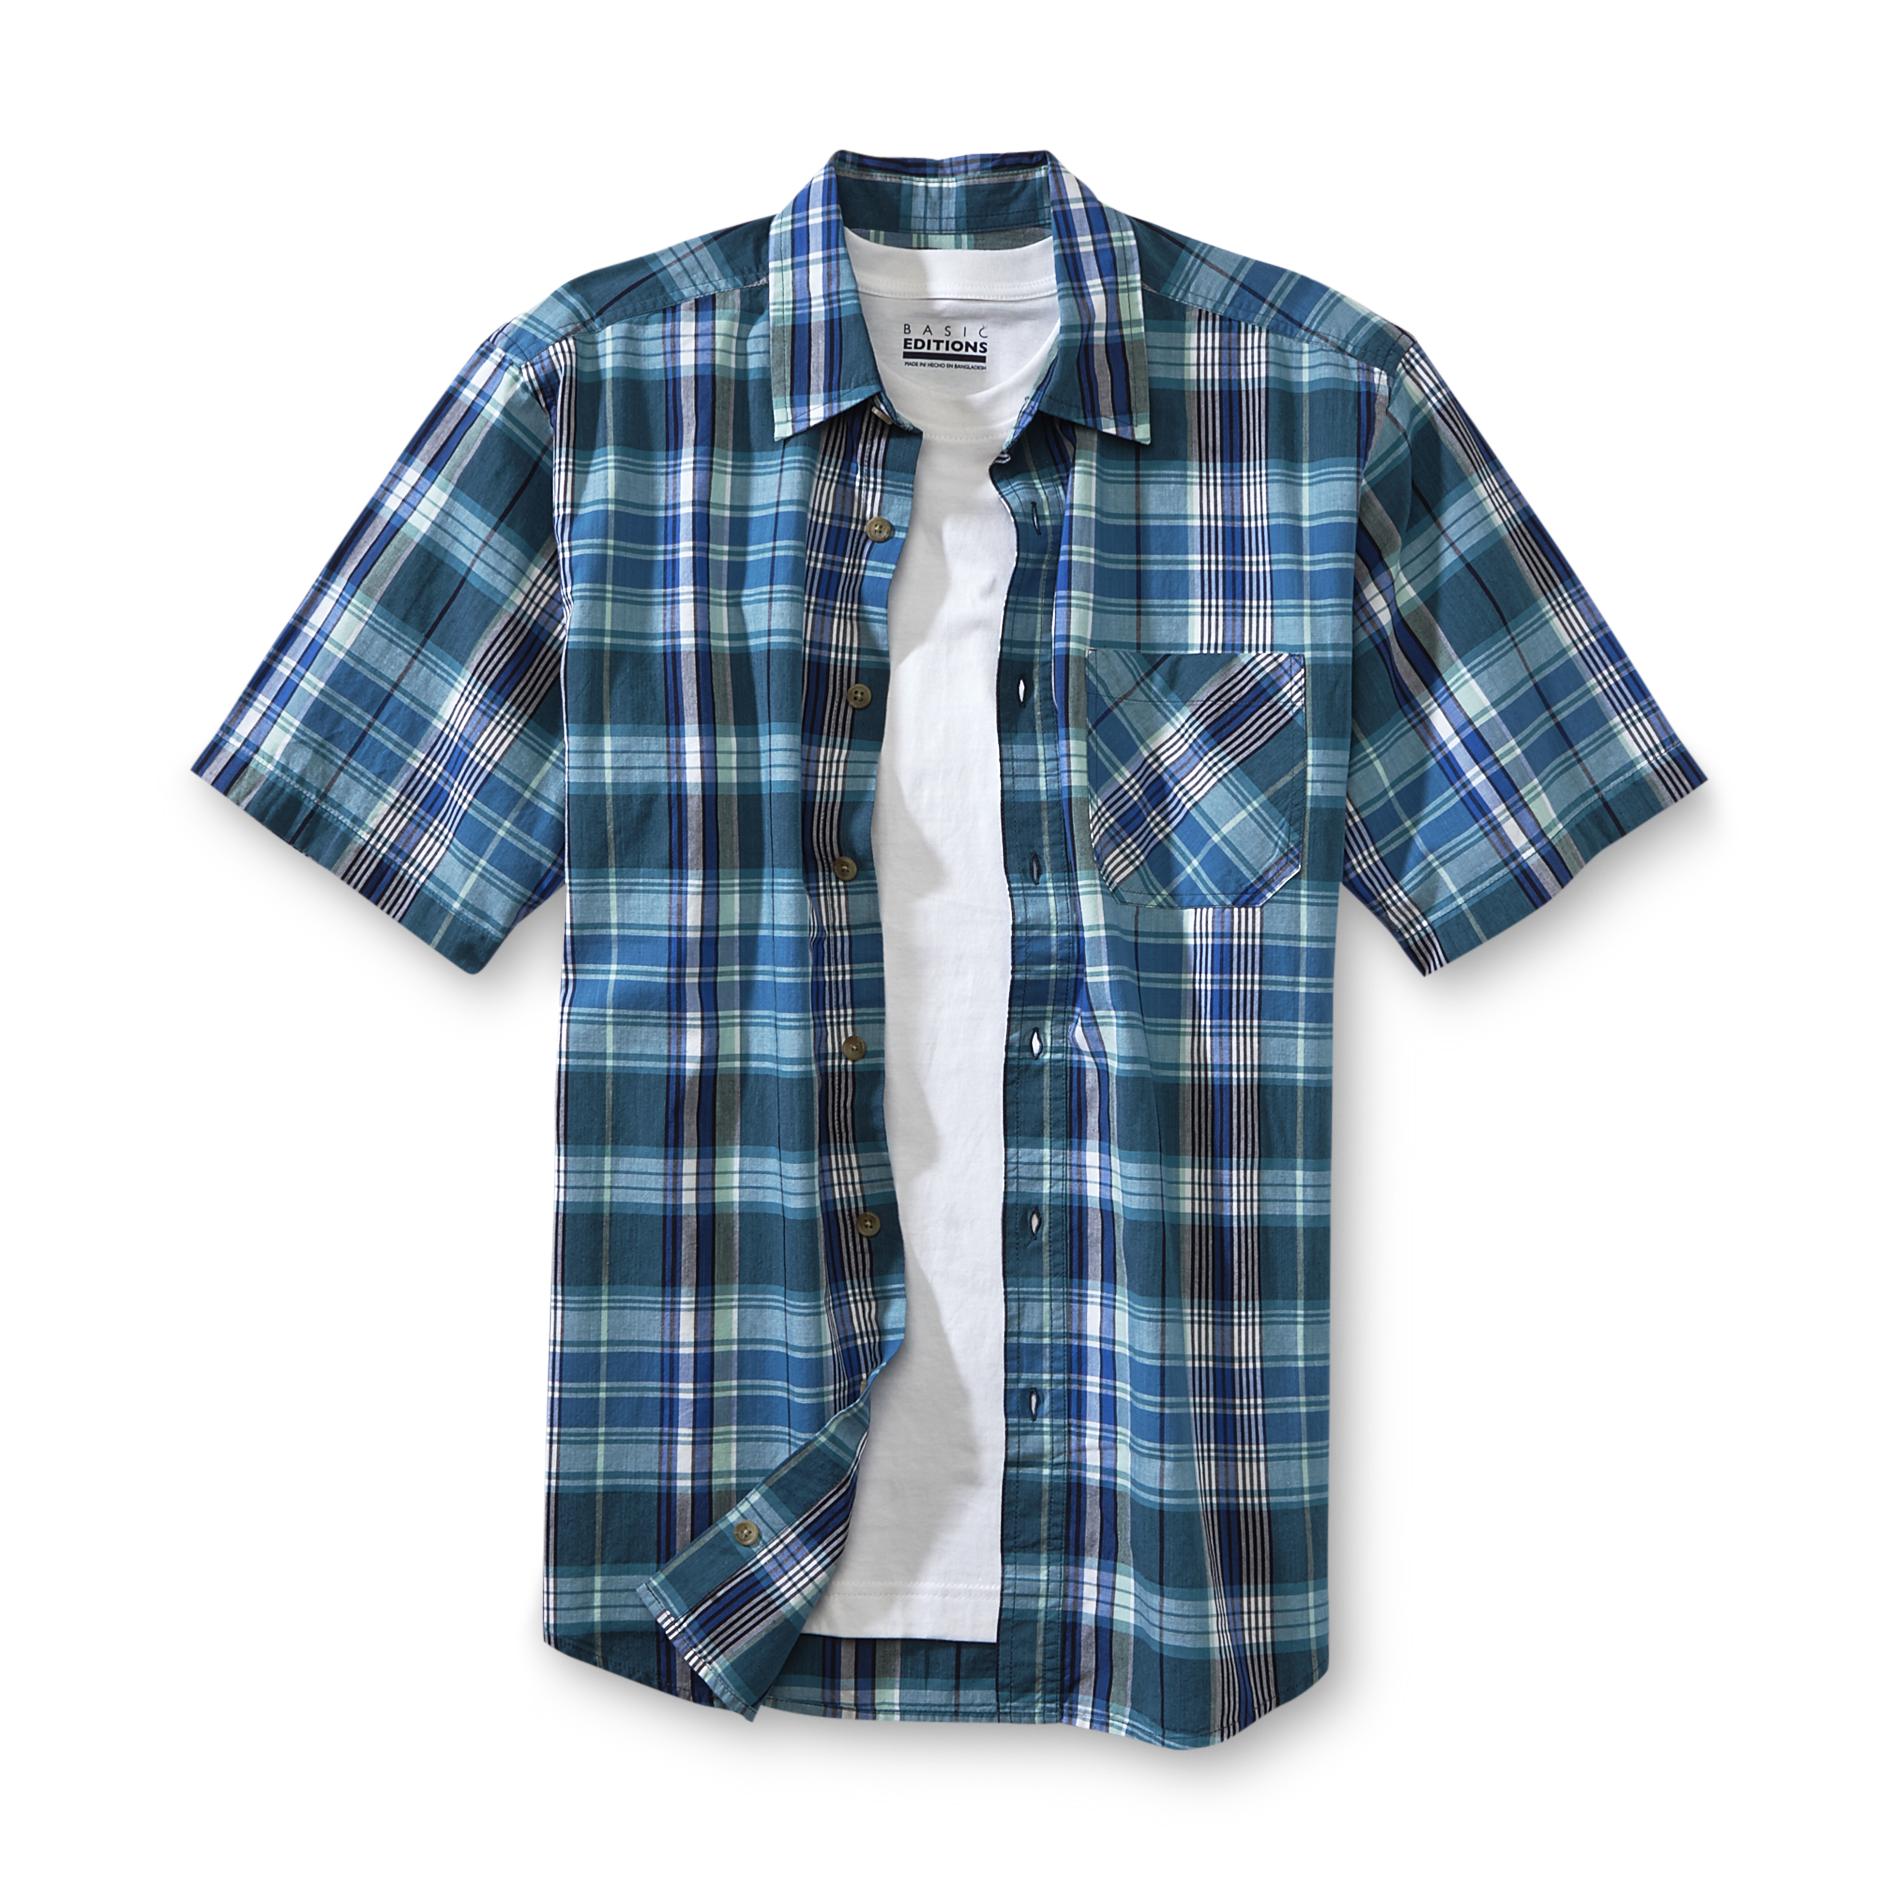 Basic Editions Men's Collared Shirt & T-Shirt - Plaid